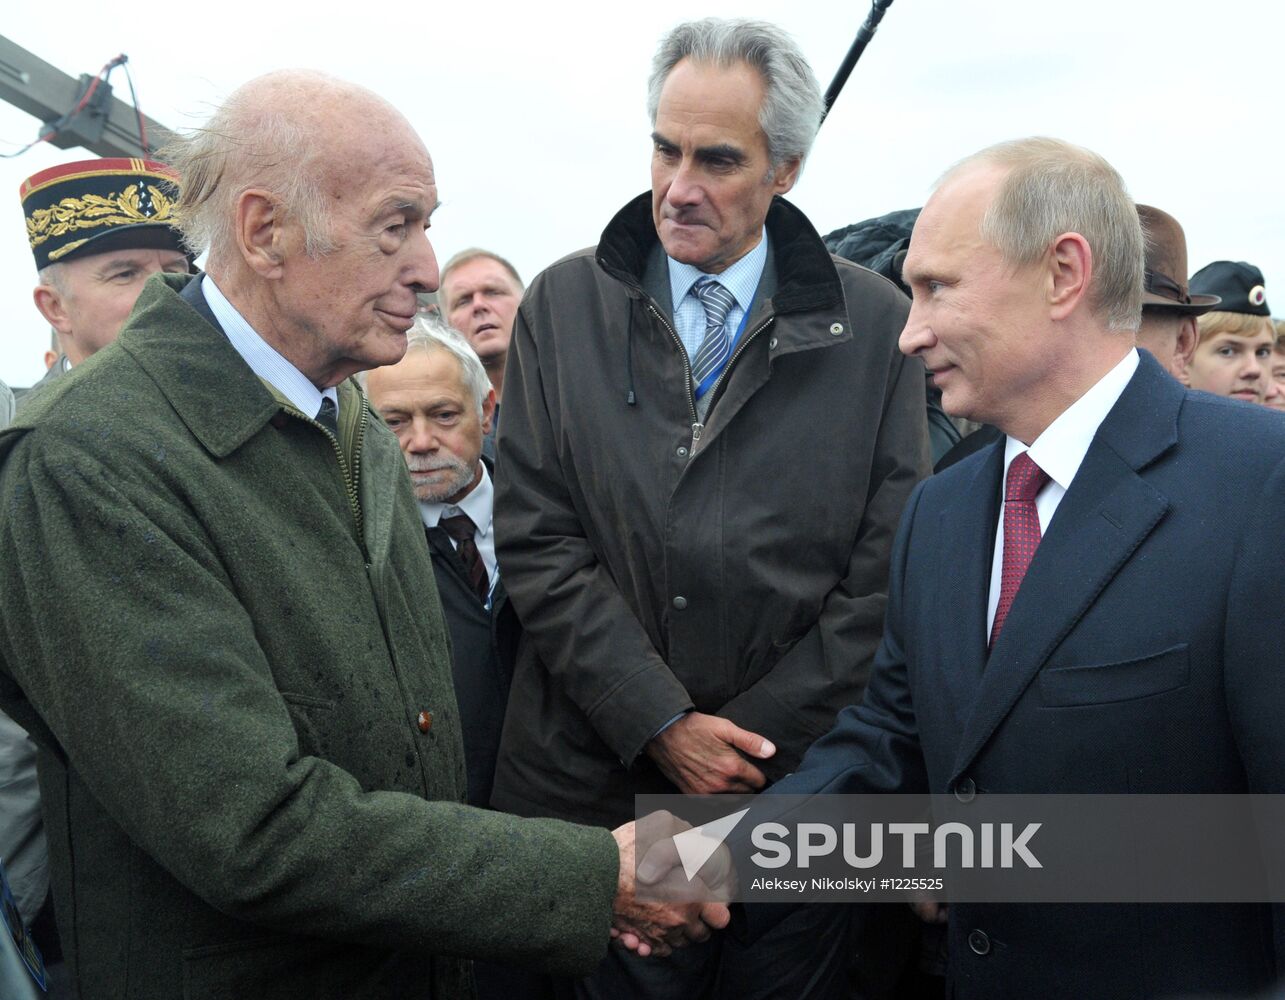 Putin attends celebrations of Battle of Borodino bicentenary